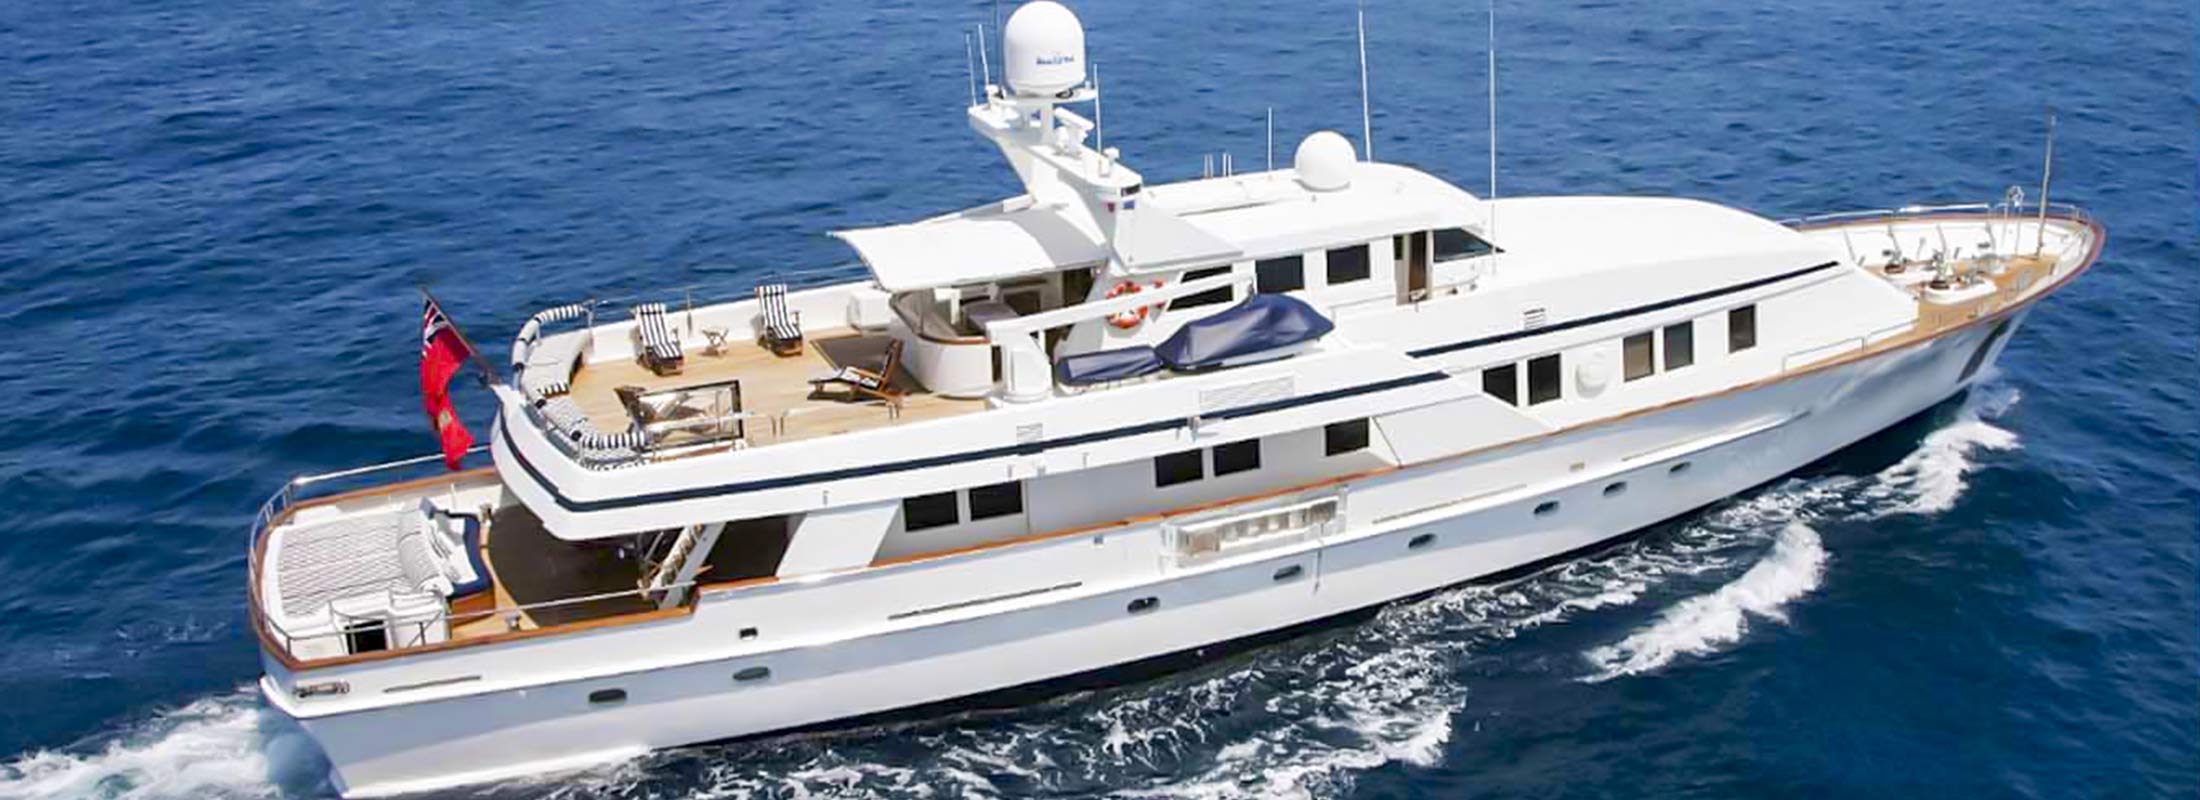 Fiorente Motor Yacht for Charter Mediterranean slider 2